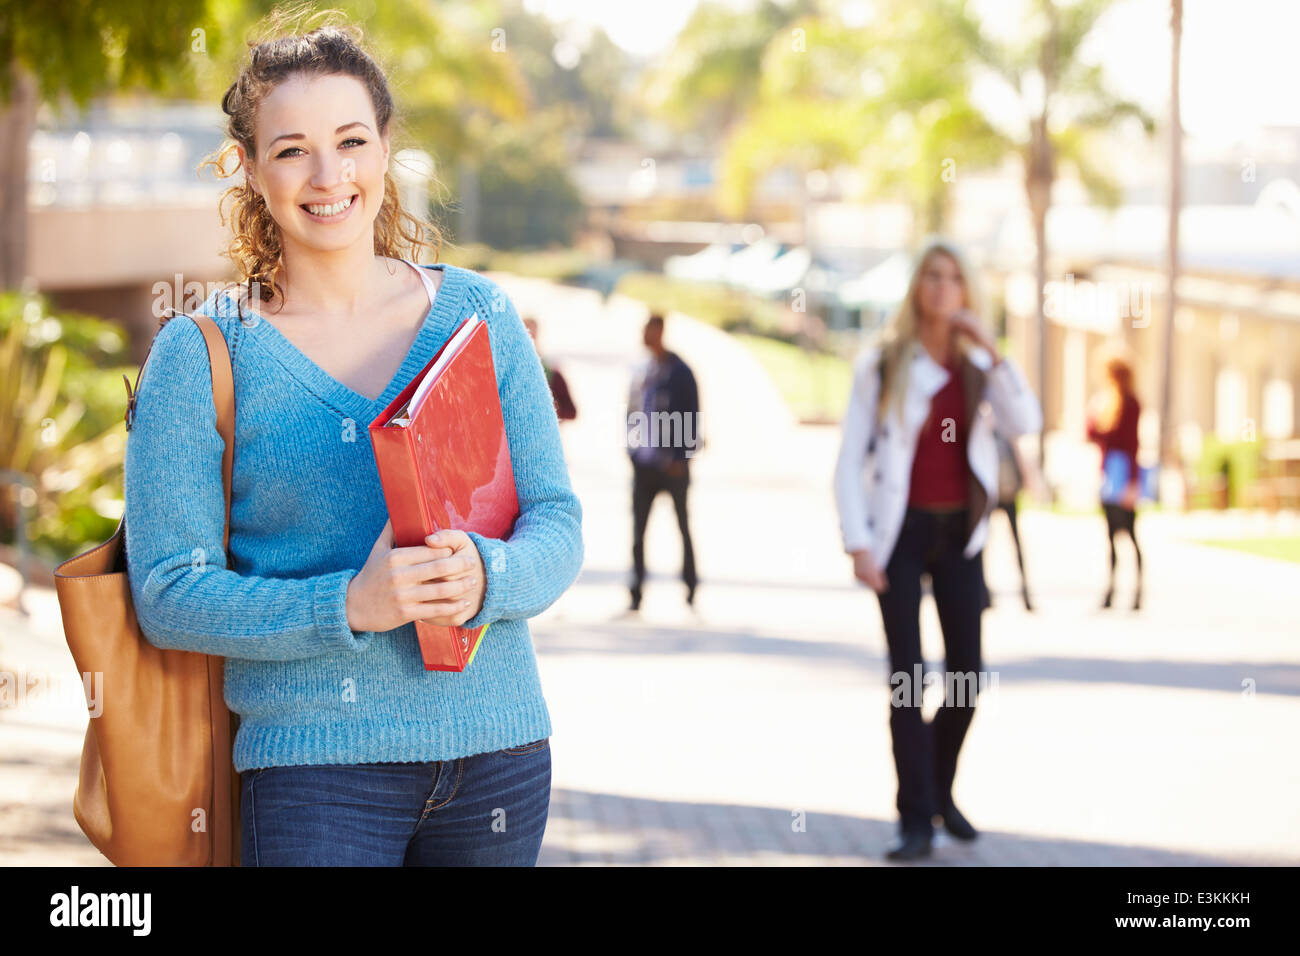 Portrait Of Female University Student Outdoors On Campus Stock Photo